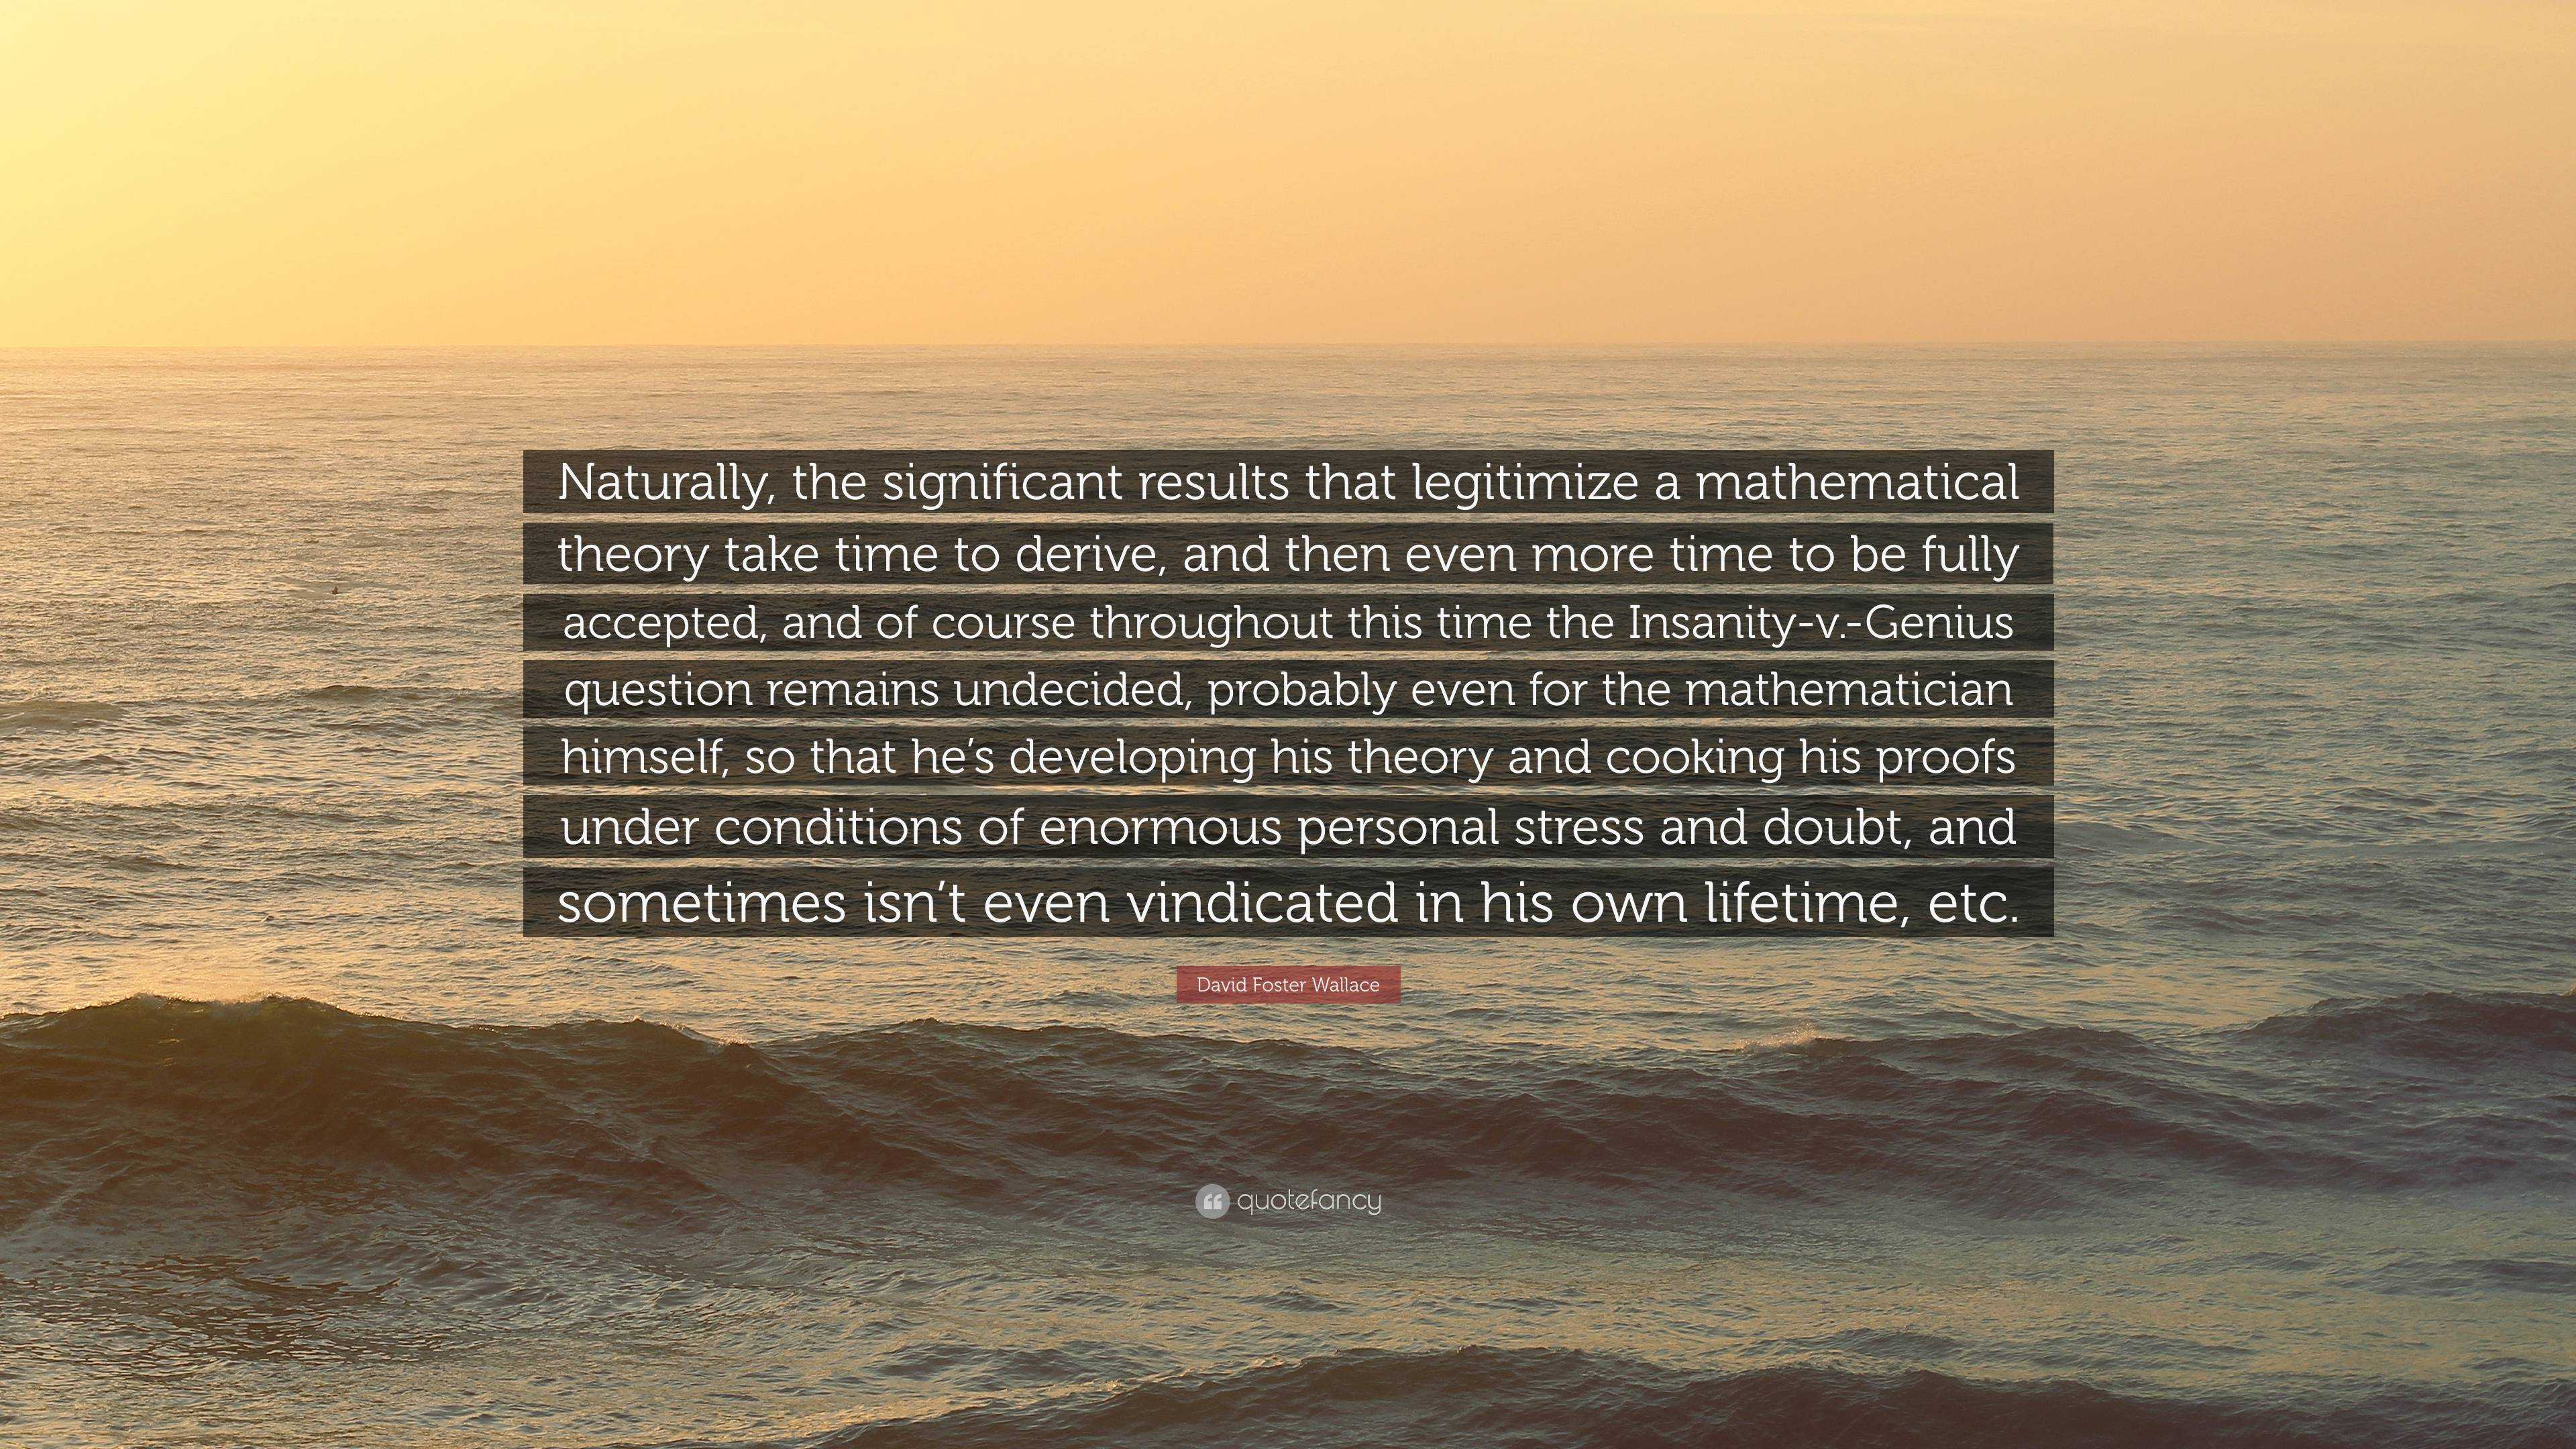 David Foster Wallace, mathematician